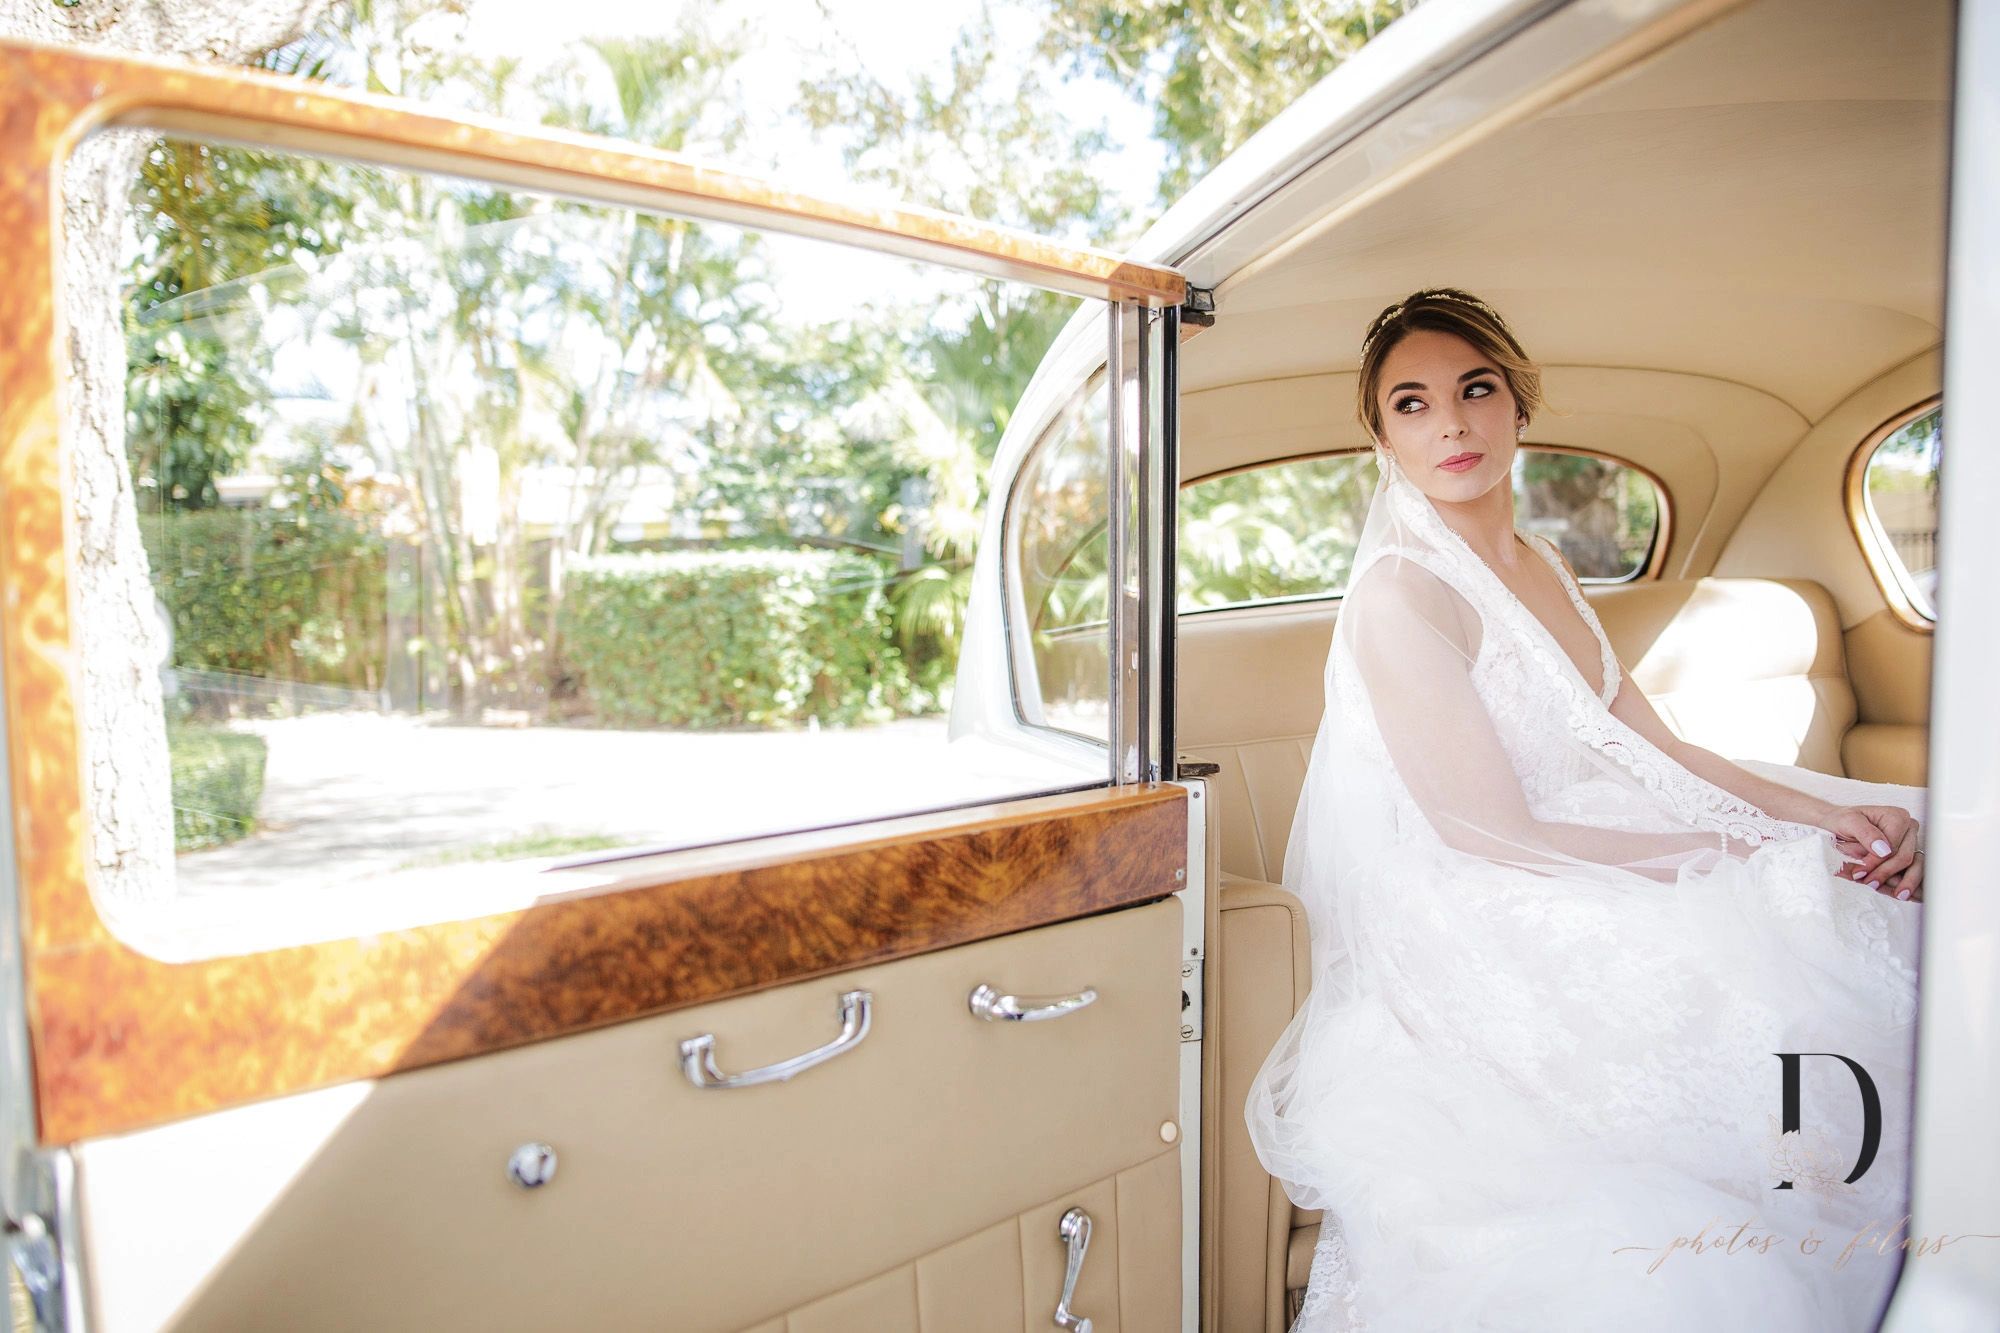 classic car rental, beige leather interior. Miami wedding transportation